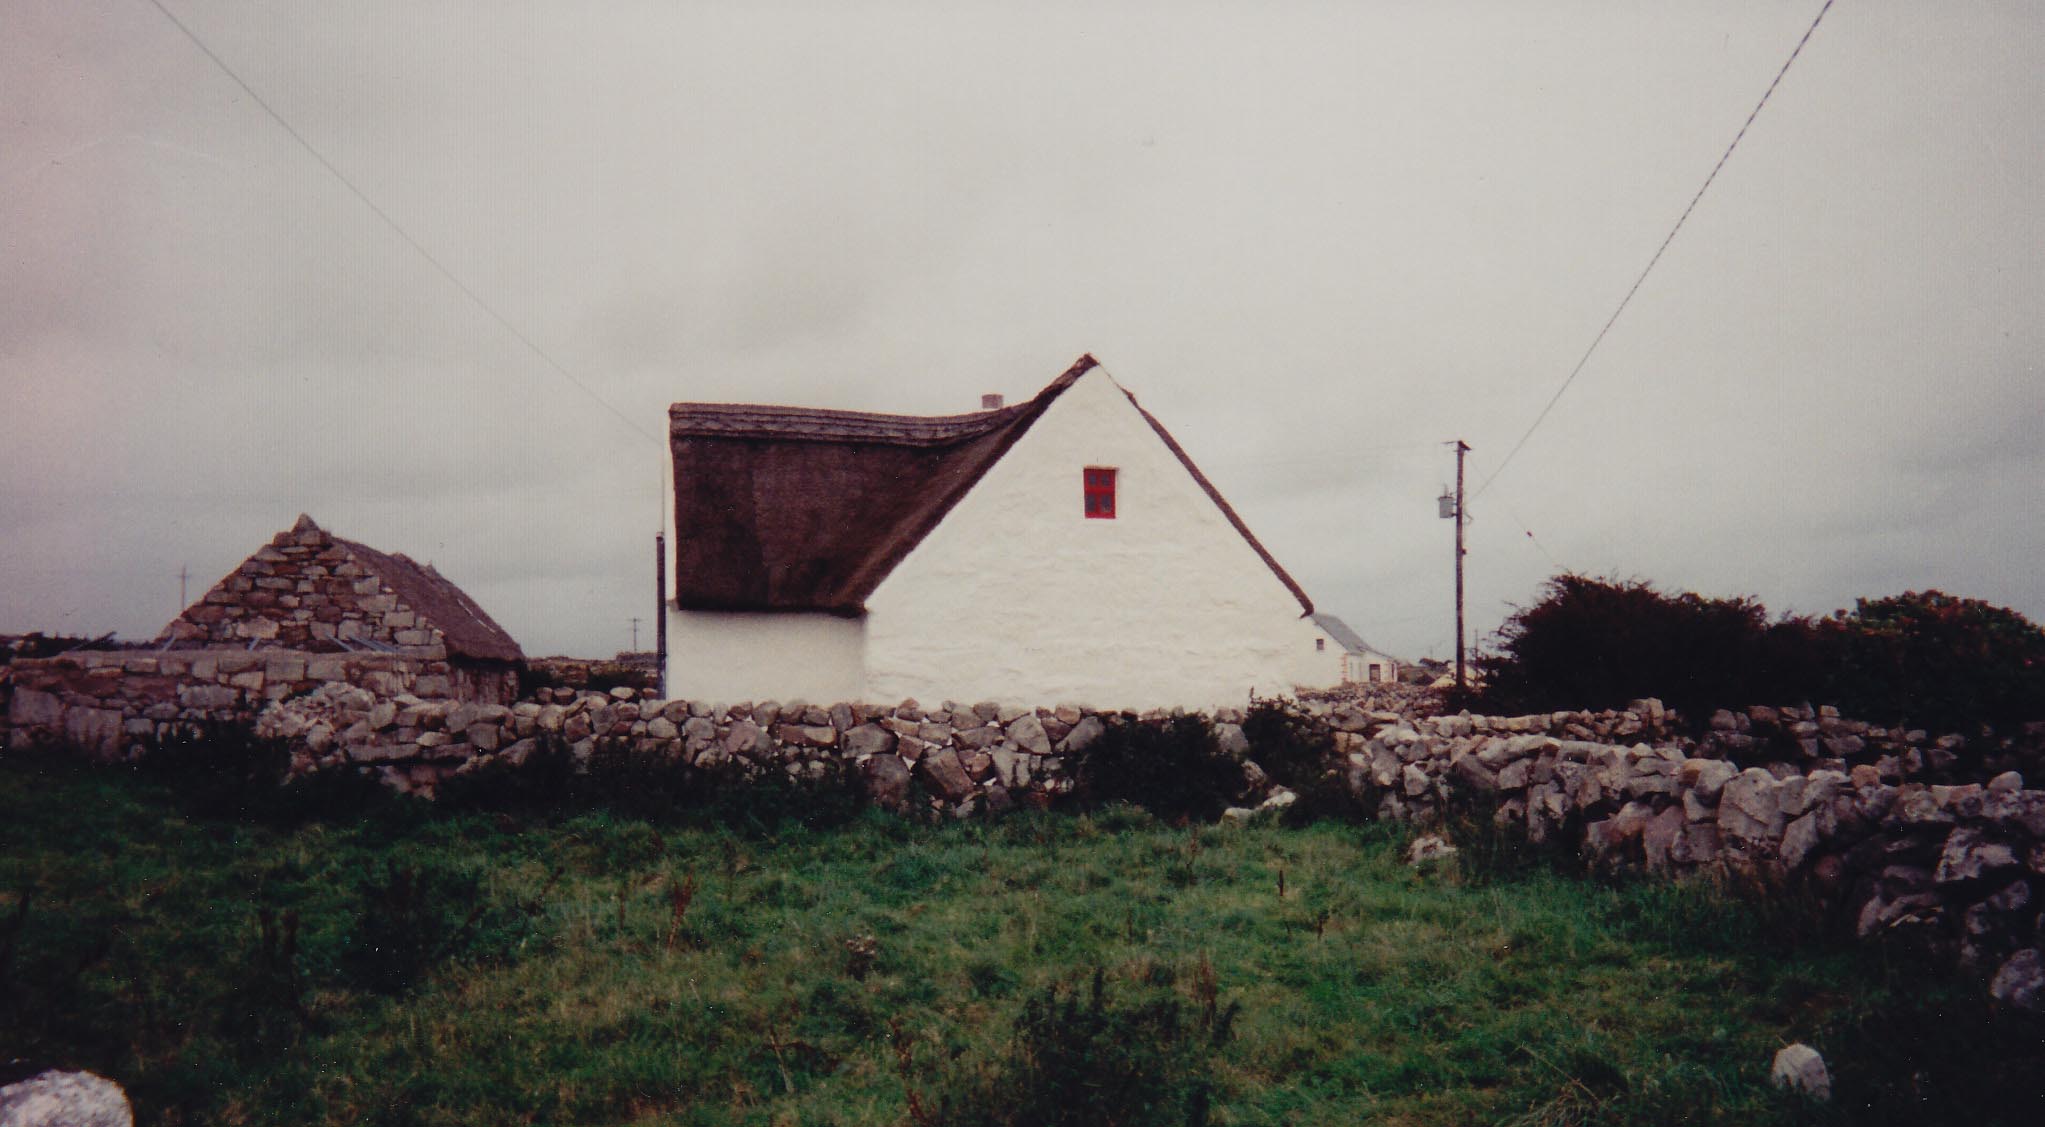 My grandmother's family home in County Kilkenny, Ireland (Margaret Cessna)